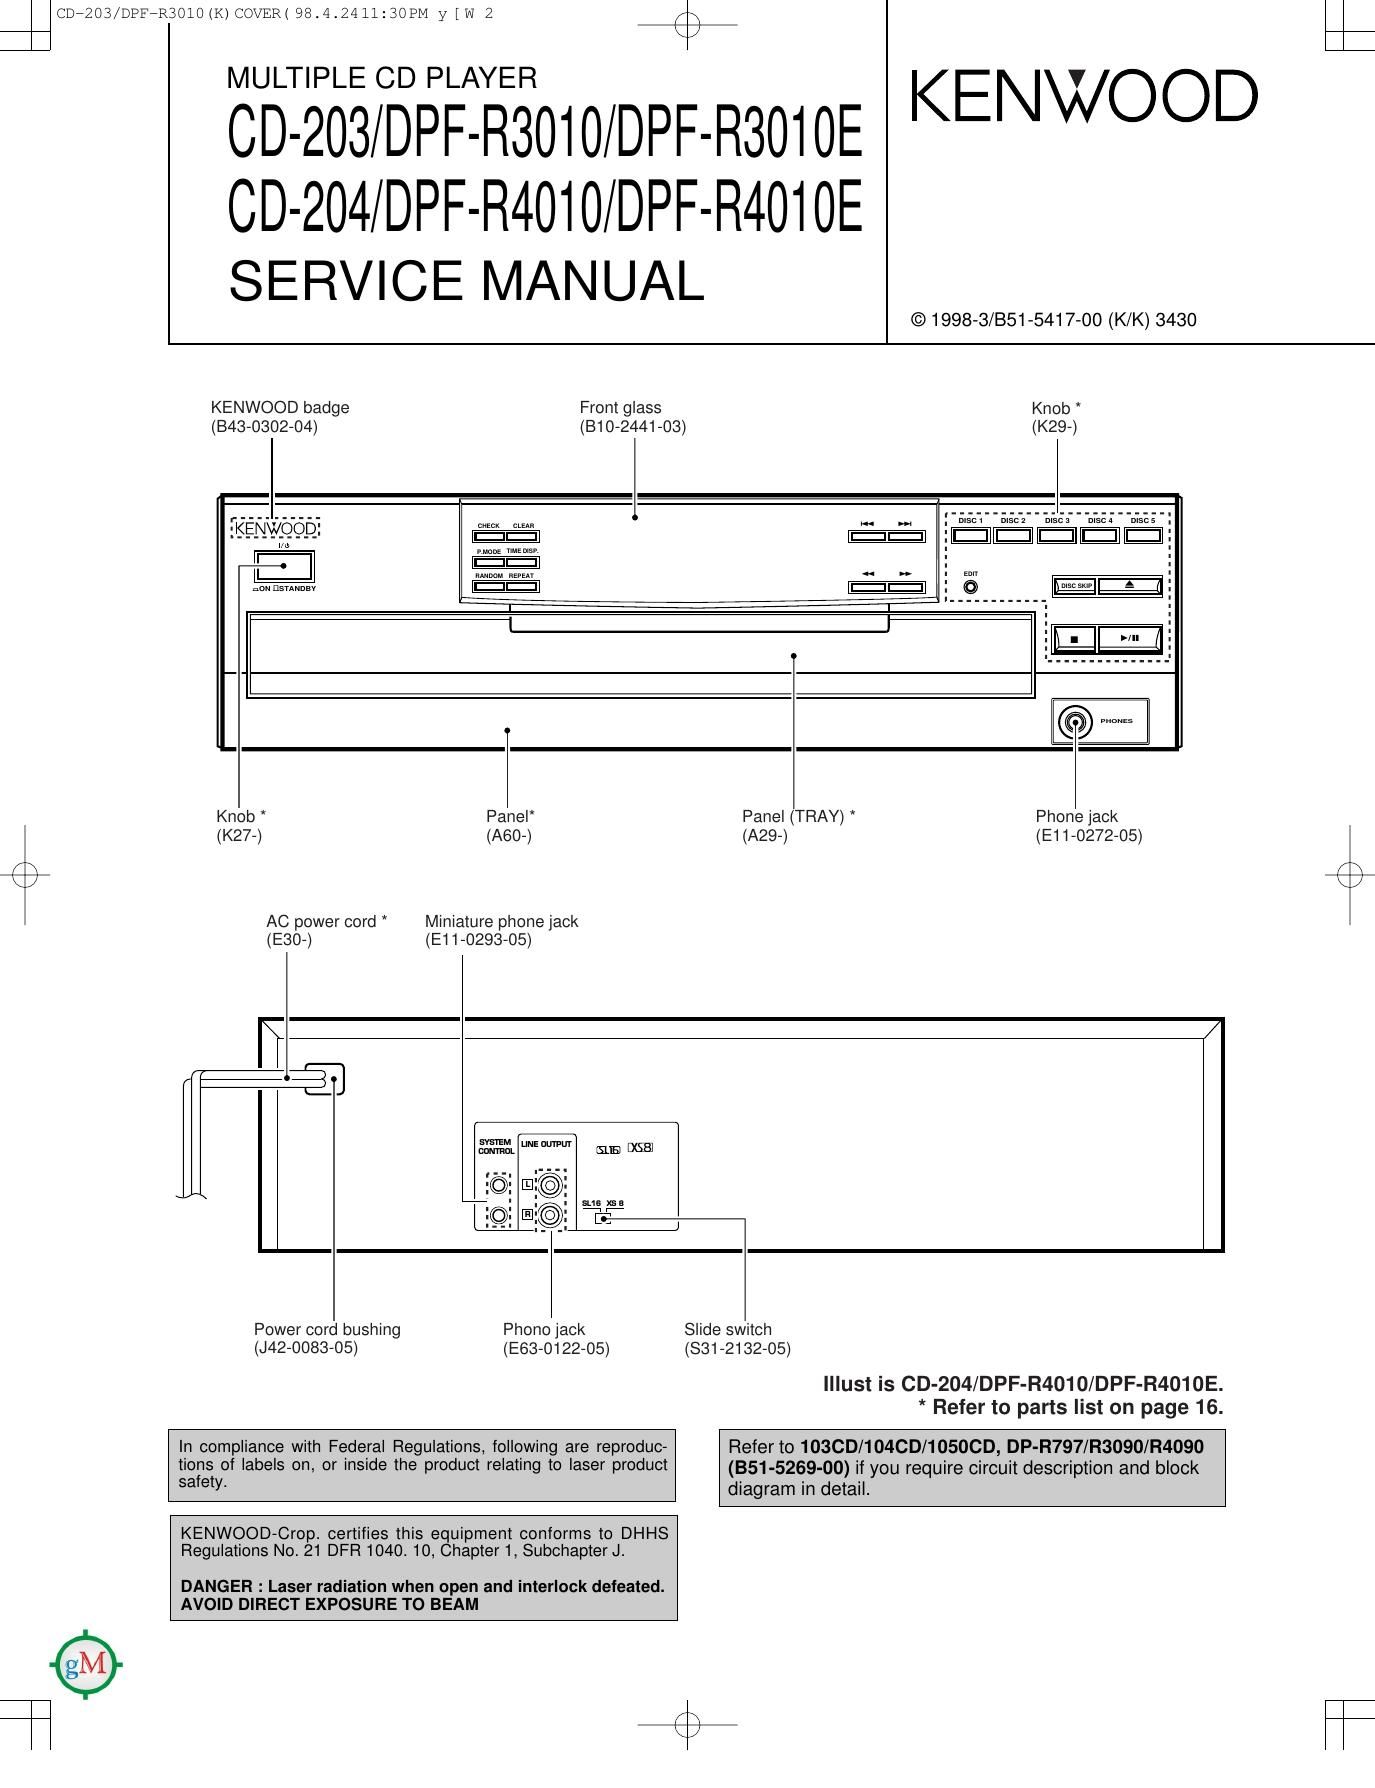 Kenwood DPFR 4010 Service Manual